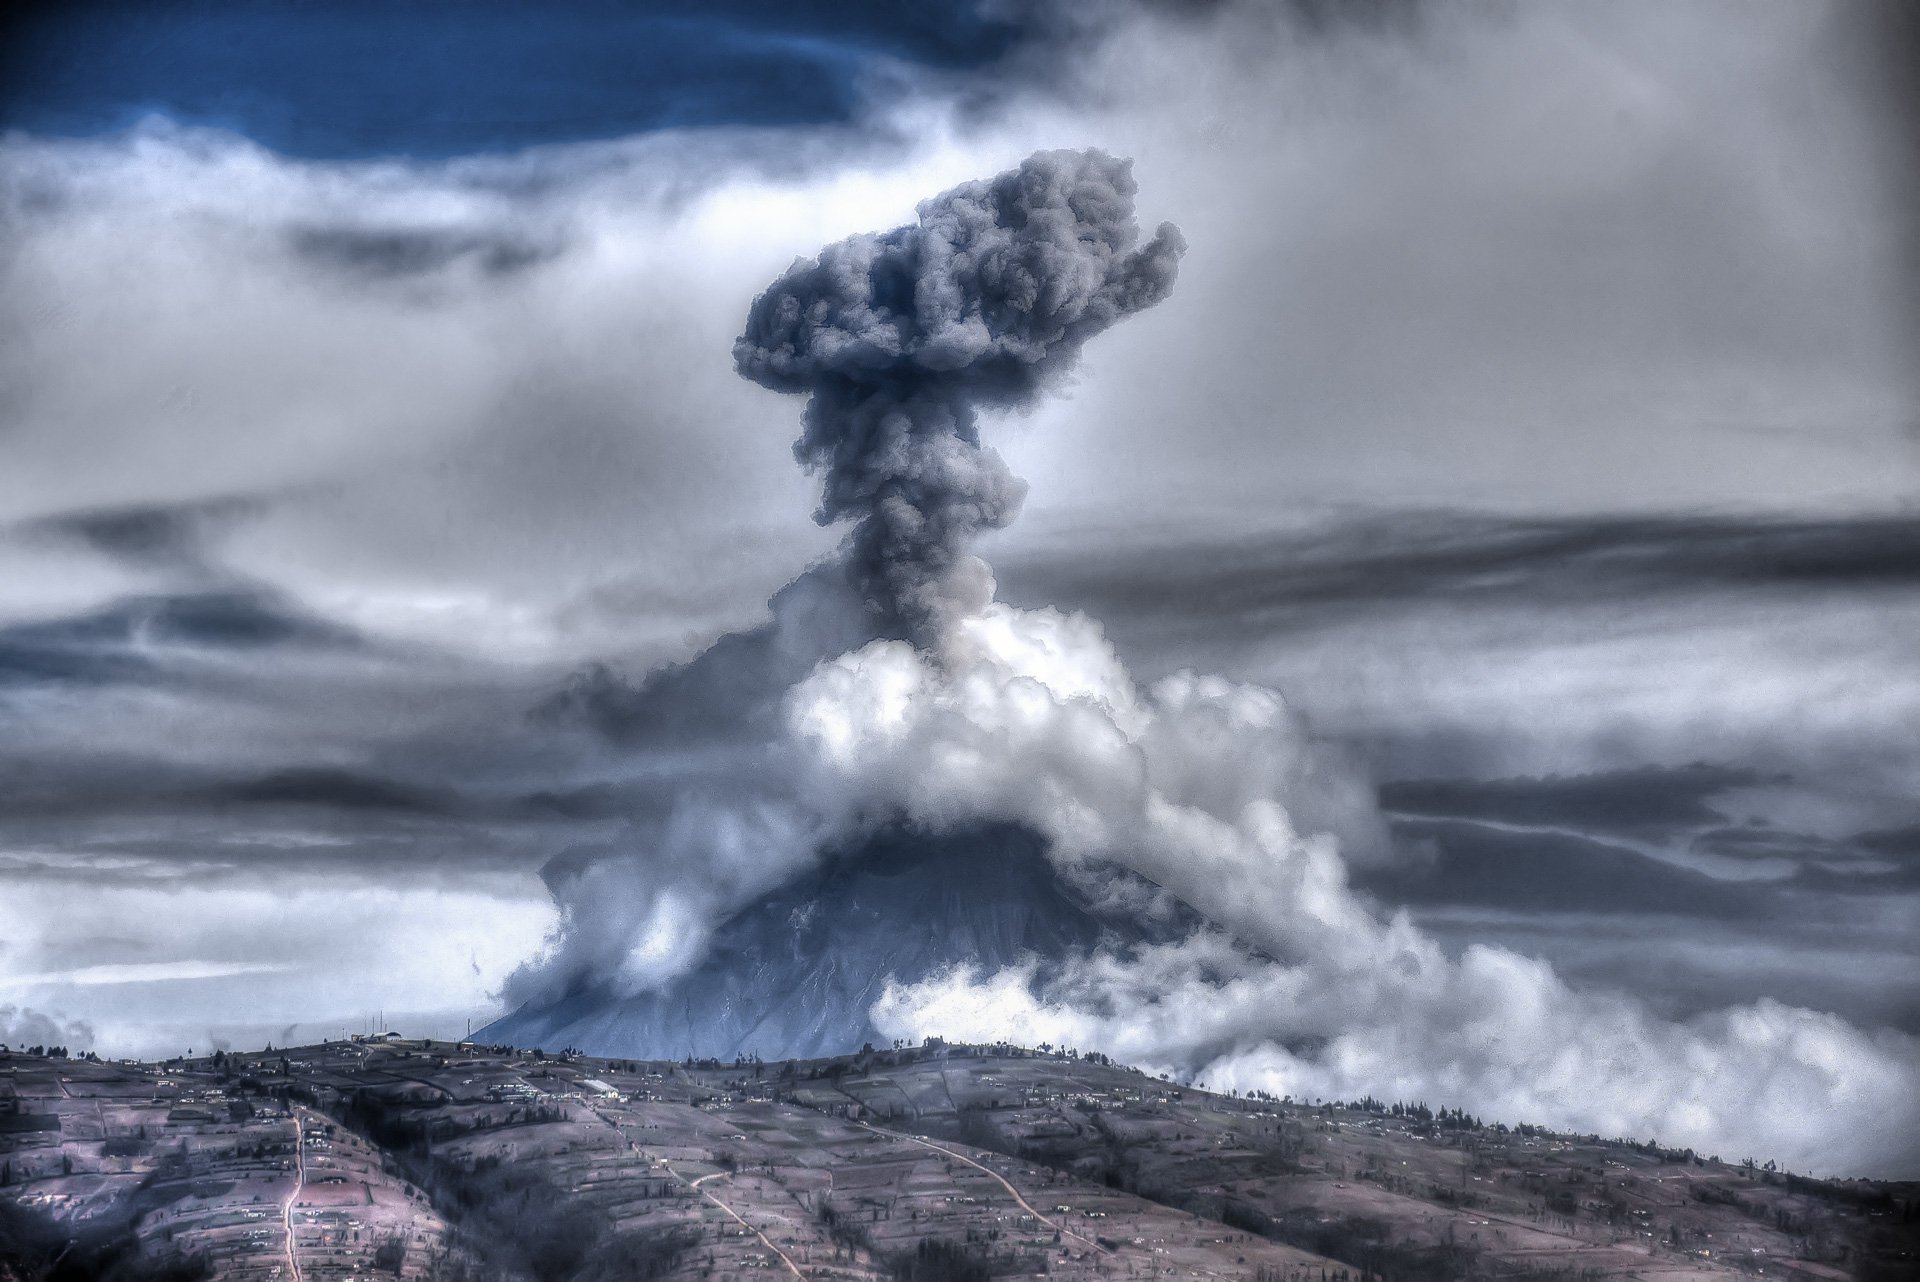 Извержение вулкана Тунгурауа. Из цикла "Mirabilia mundo".